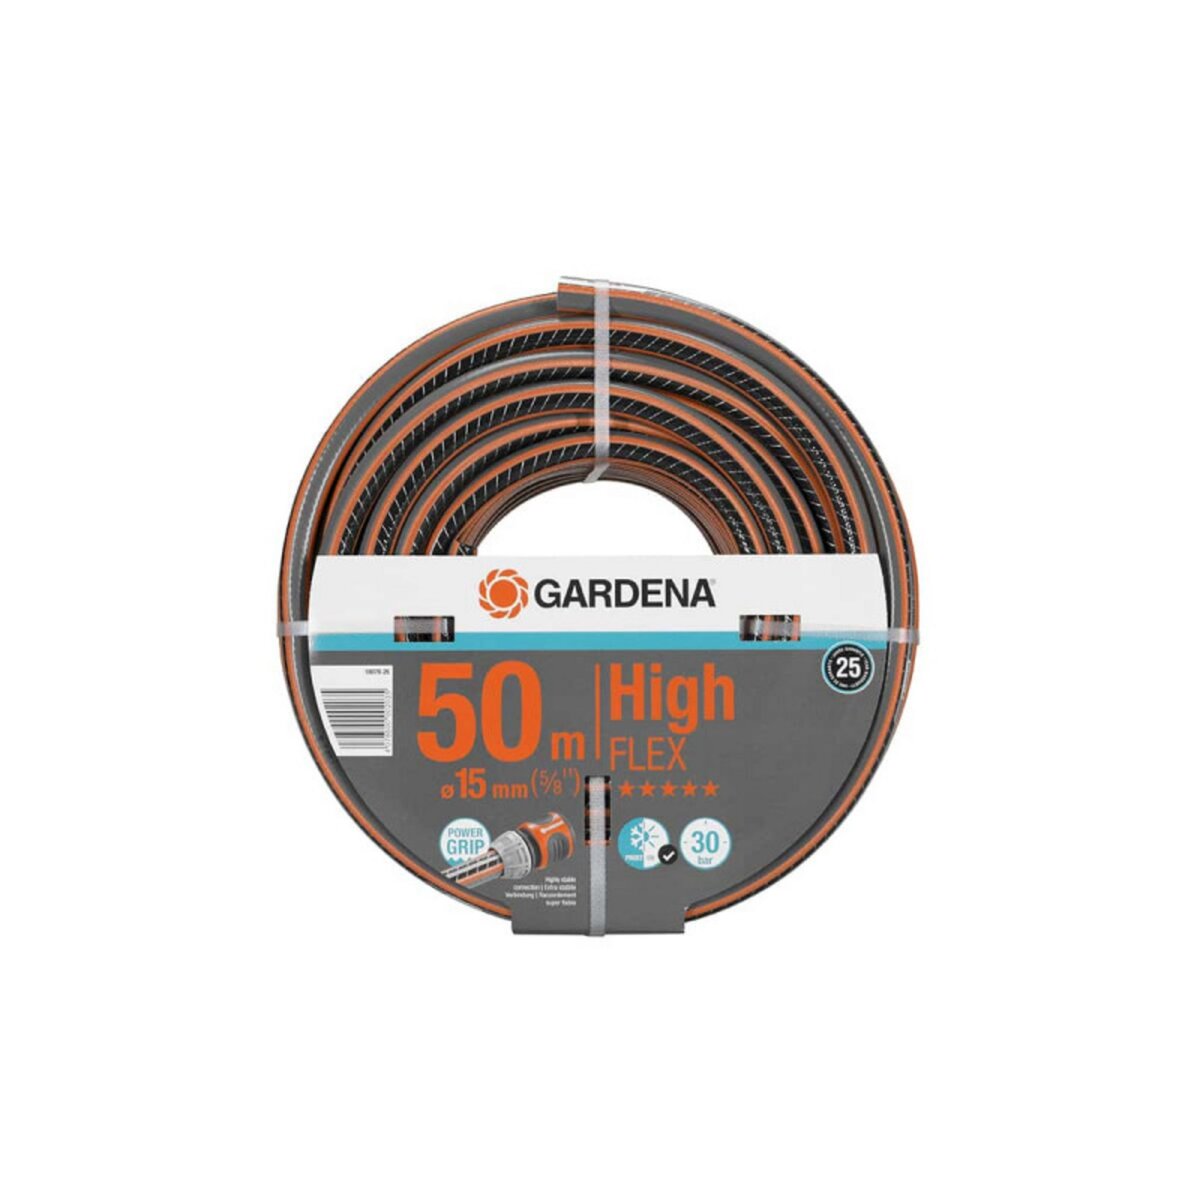 Gardena Tuyau d'arrosage GARDENA - Comfort HighFLEX - Diamètre 15 mm - 50 m - 18079-26